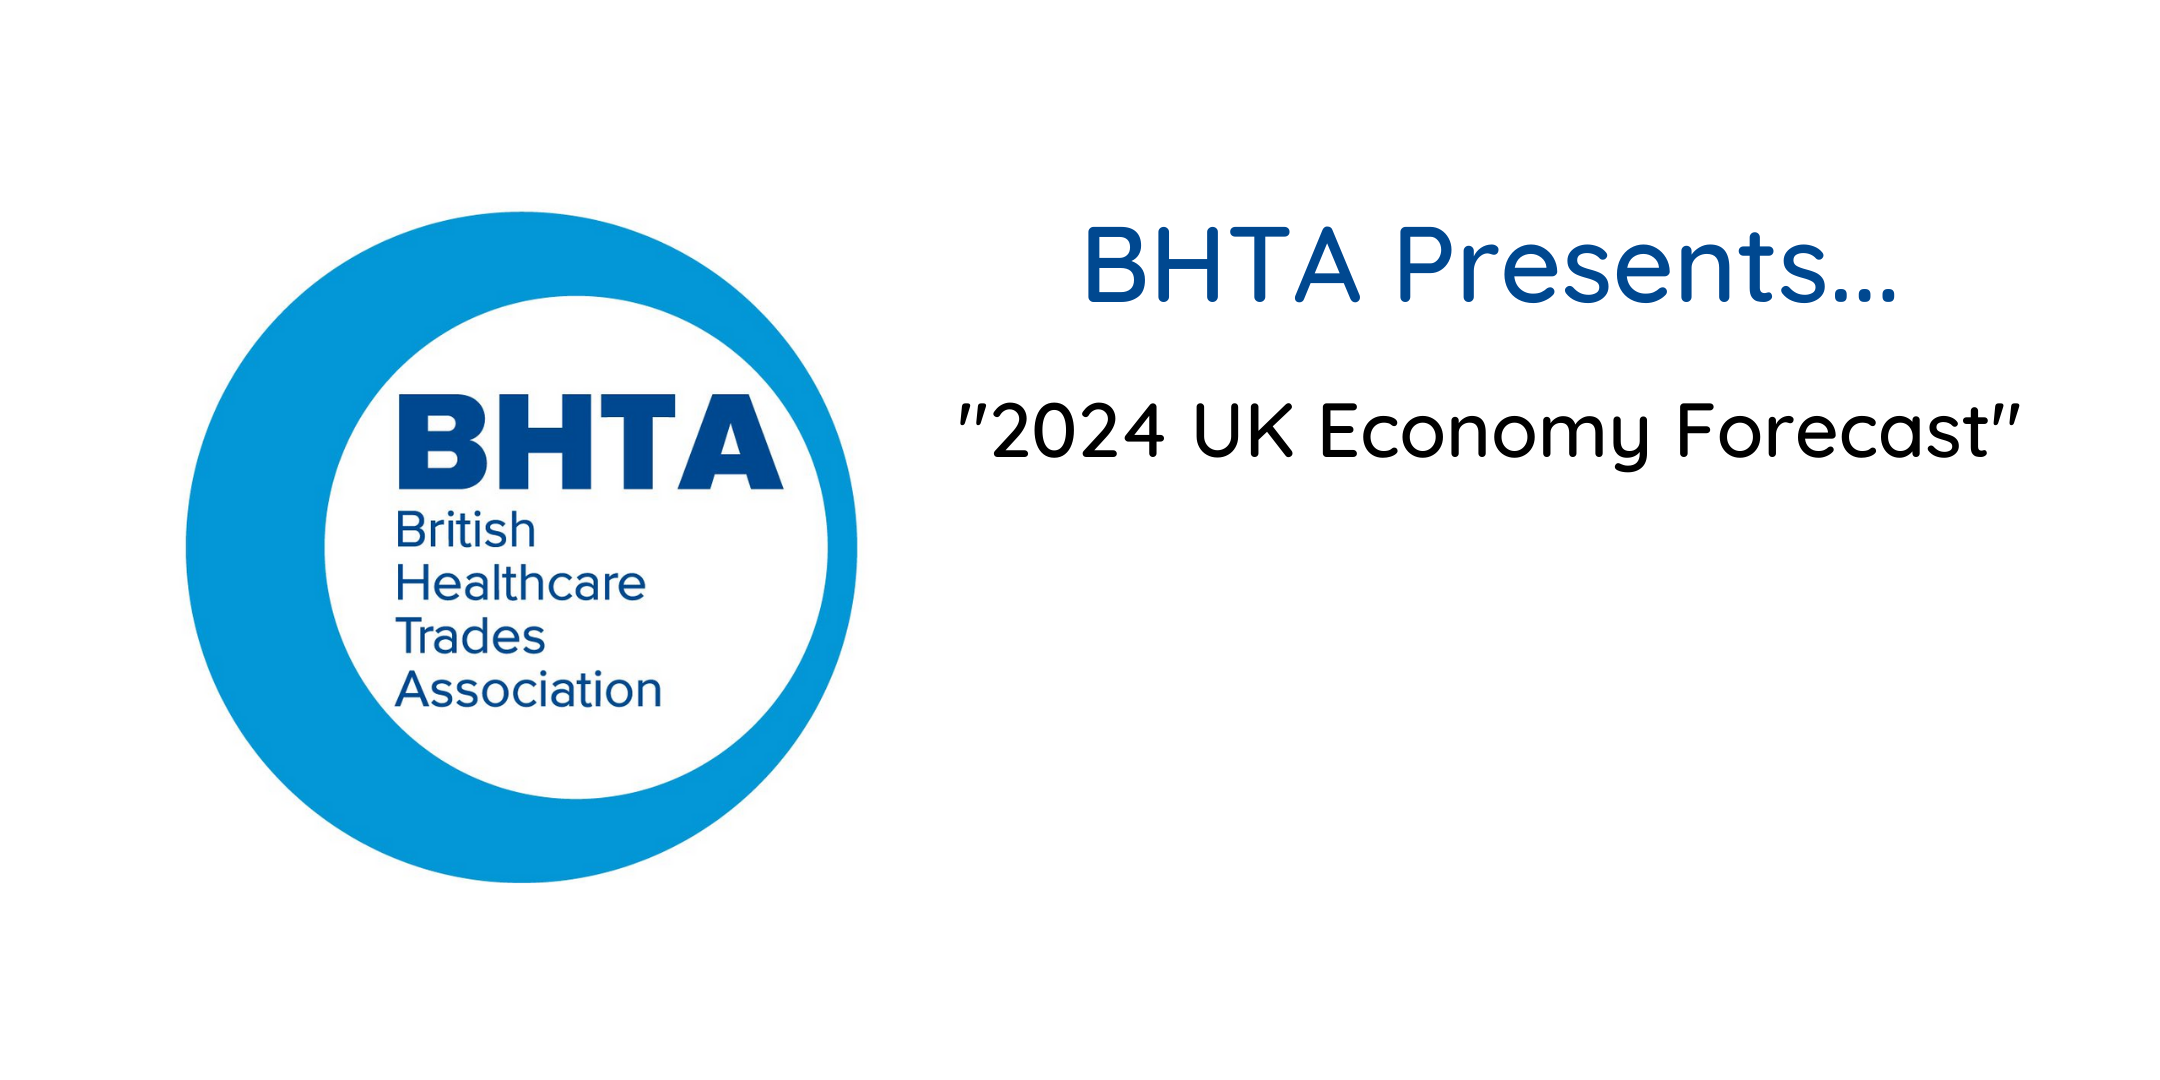 BHTA presents 2024 UK Economy Forecast